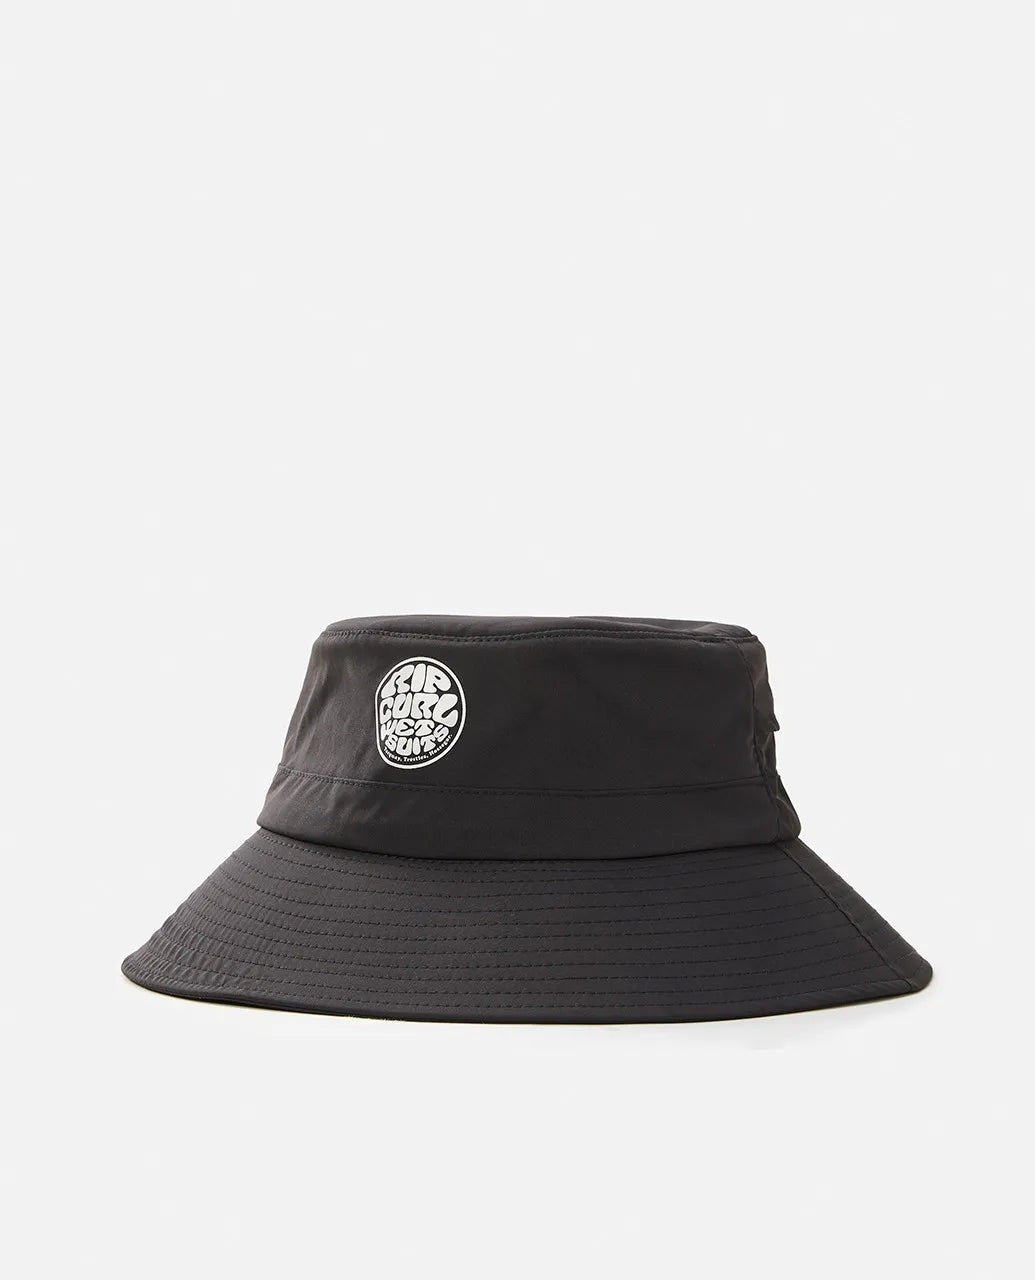 Ripcurl Surf Series Bucket Hat Hats Black S-M